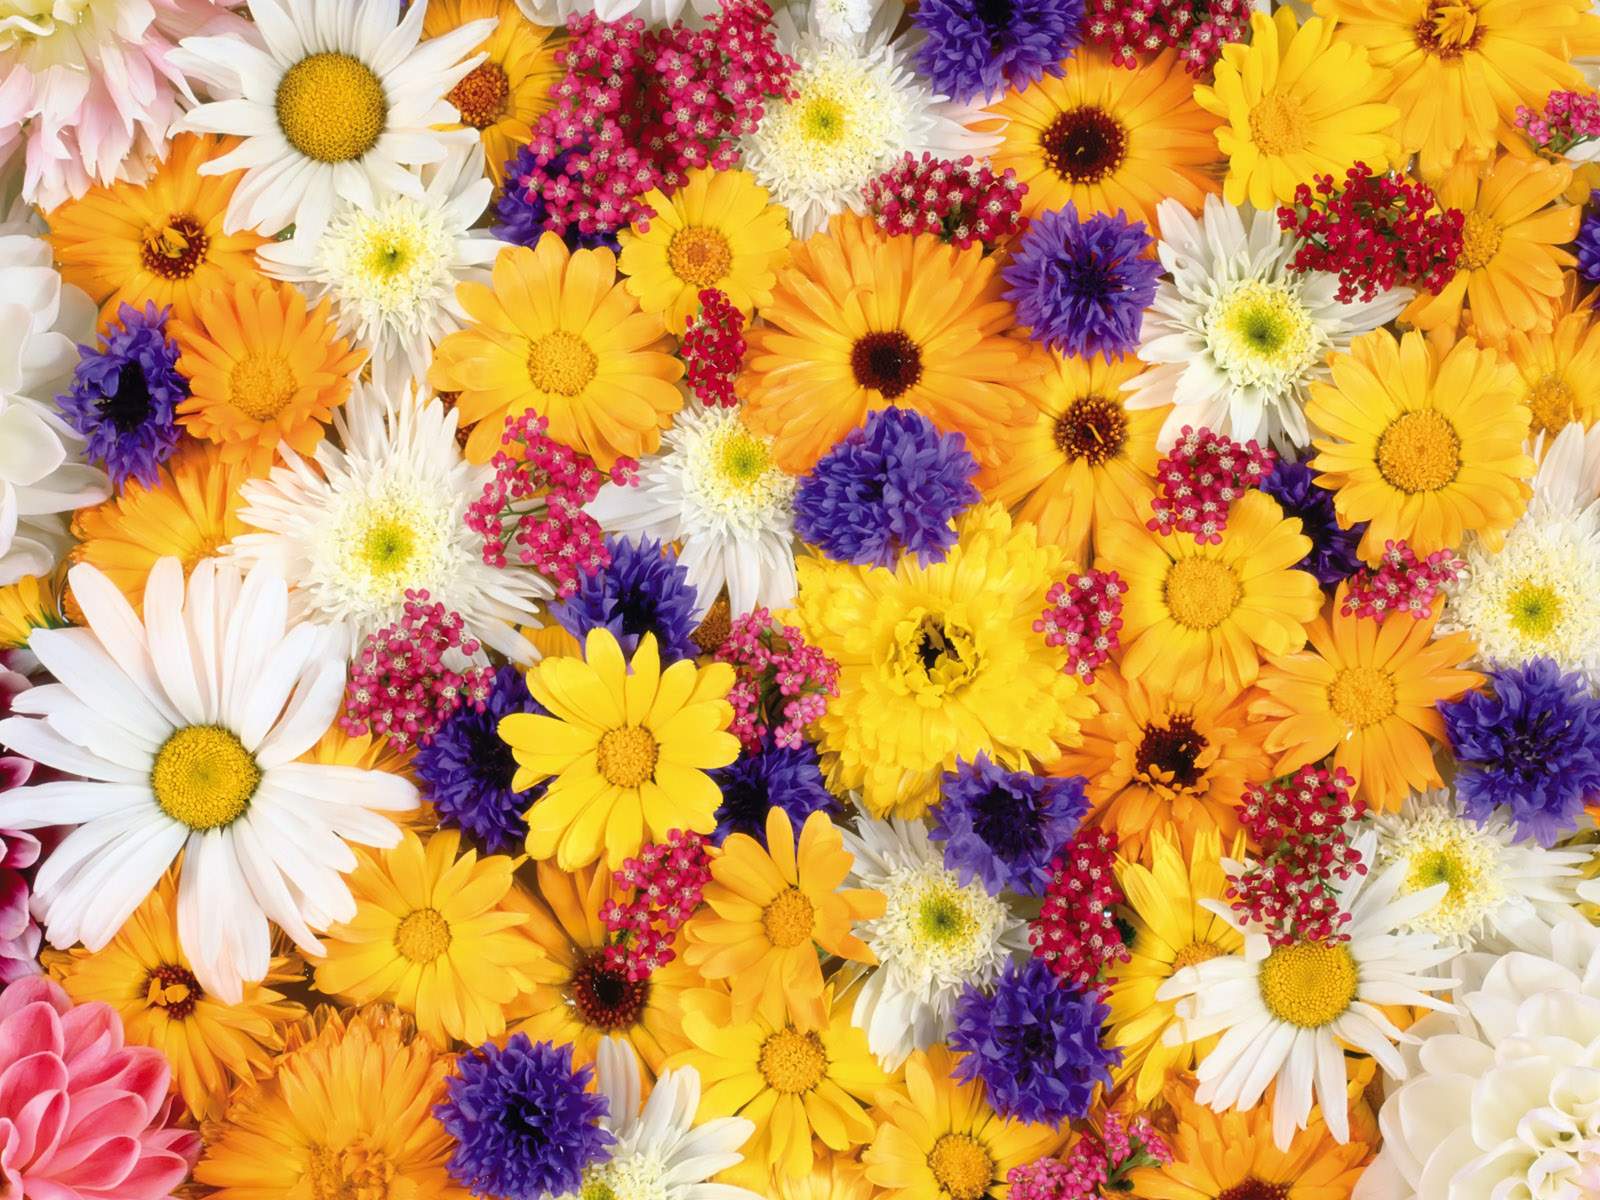 Colorful Flower Wallpaper 14 84697 Image HD Wallpaper. Wallfoy.com